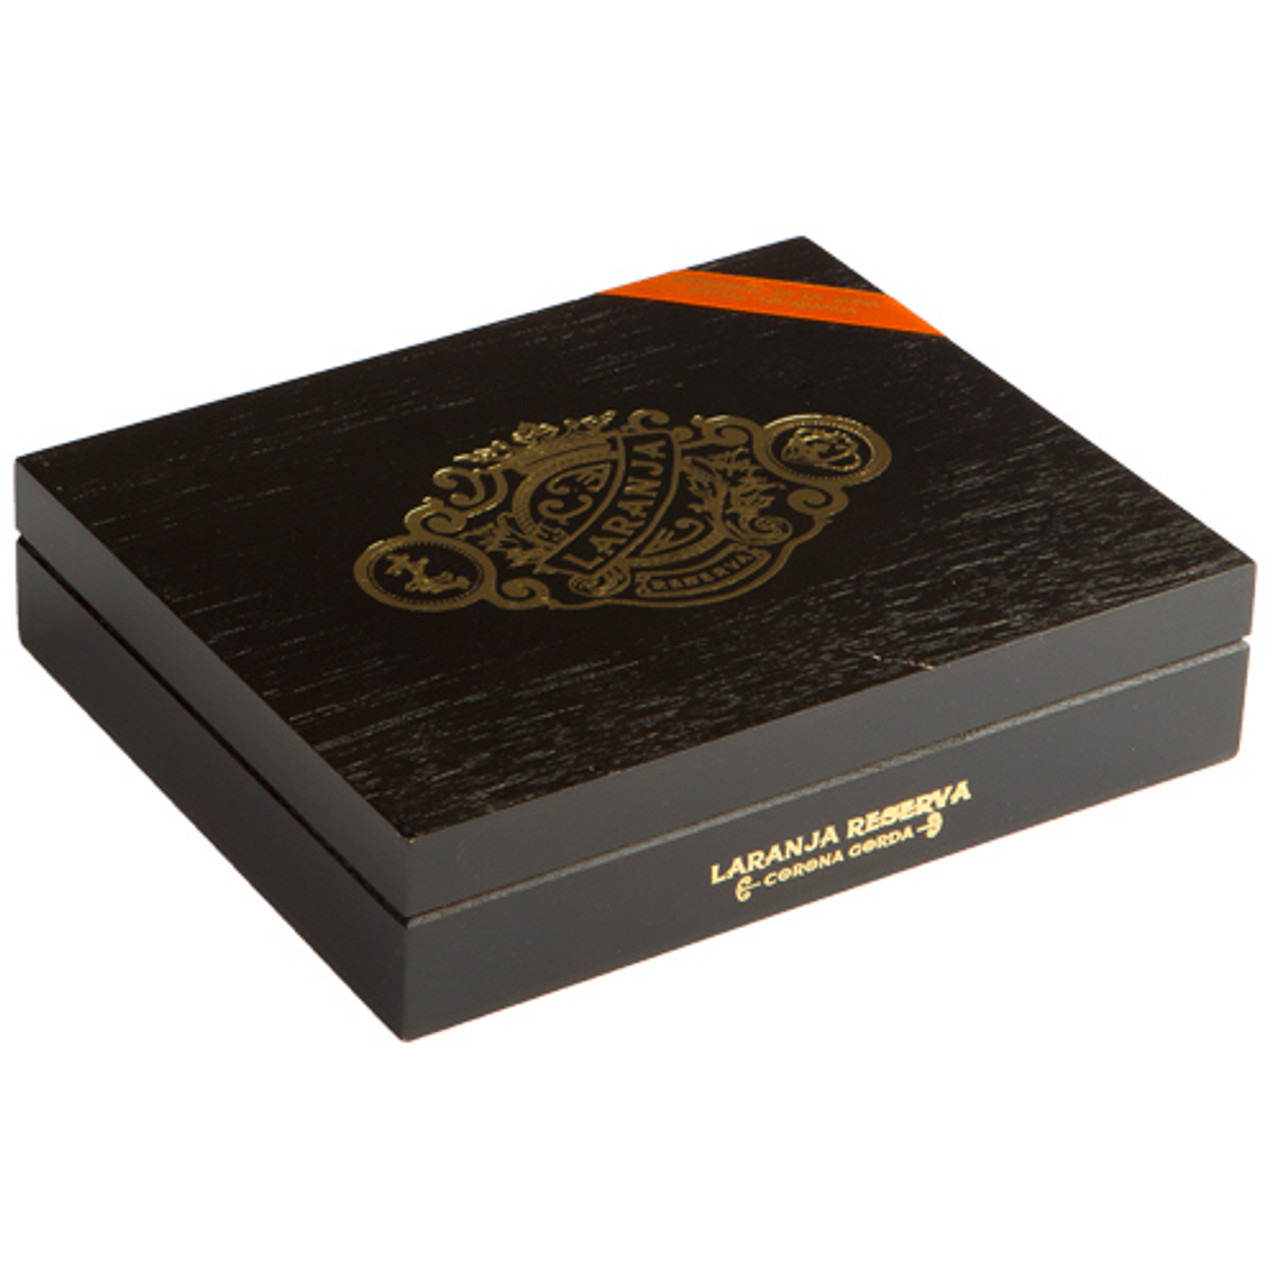 Espinosa Laranja Reserva Robusto Extra Cigars - 5.5 x 54 (Box of 20) *Box